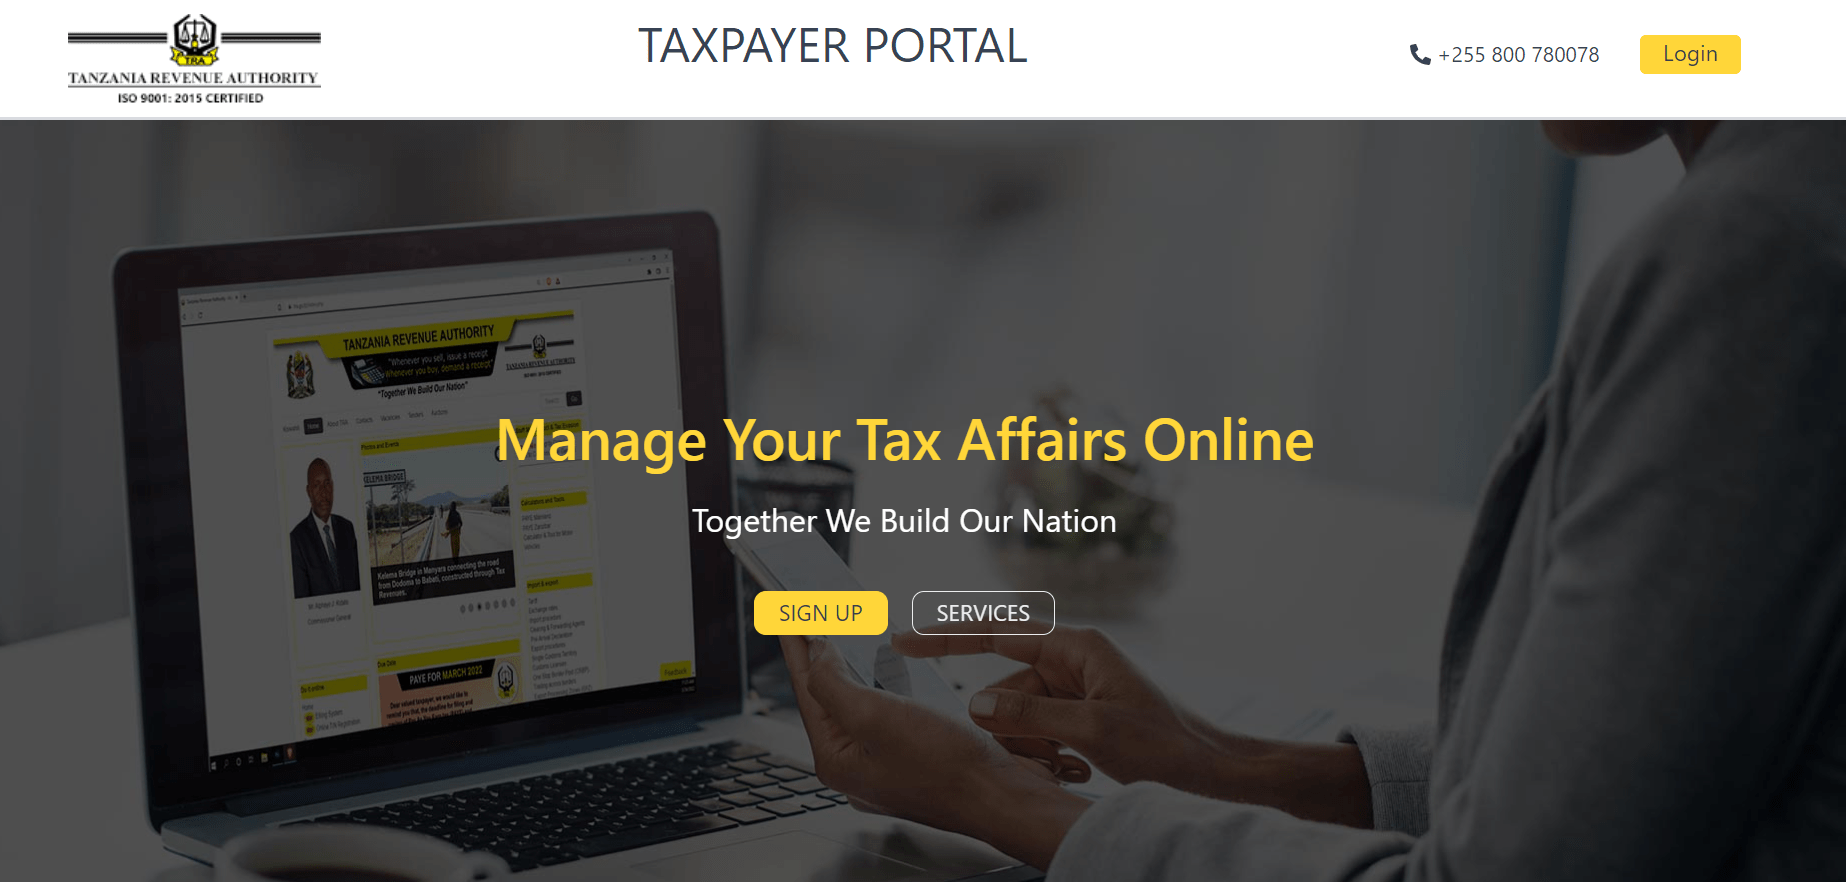 TRA Taxpayer Portal https://taxpayerportal.tra.go.tz/